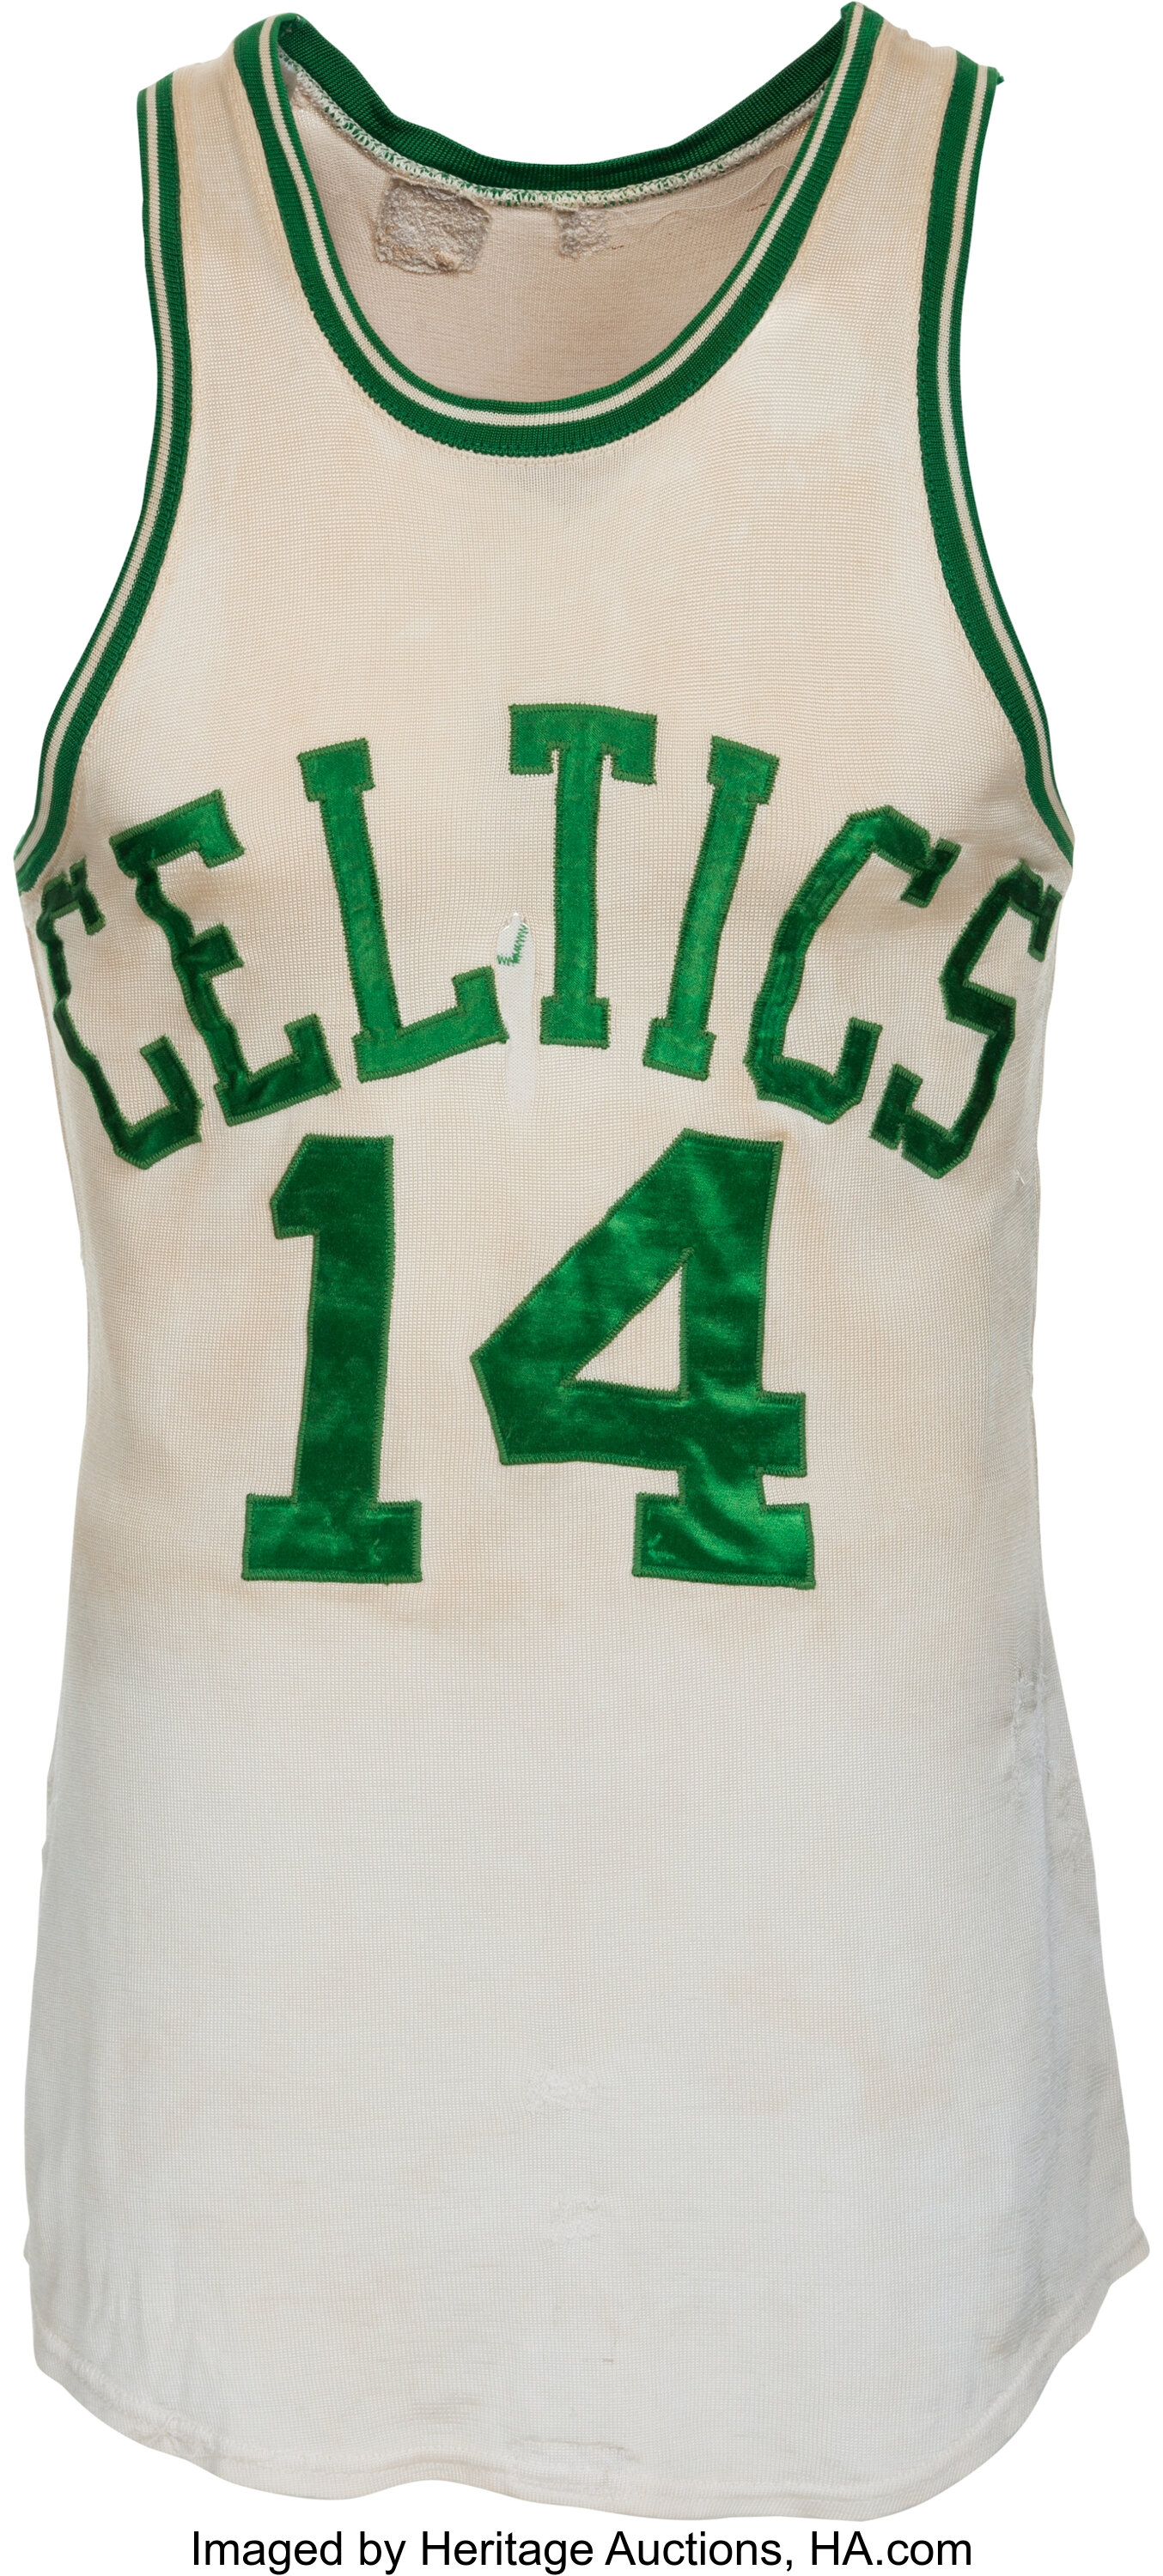 Boston Celtics Jersey worn by Bob Cousy